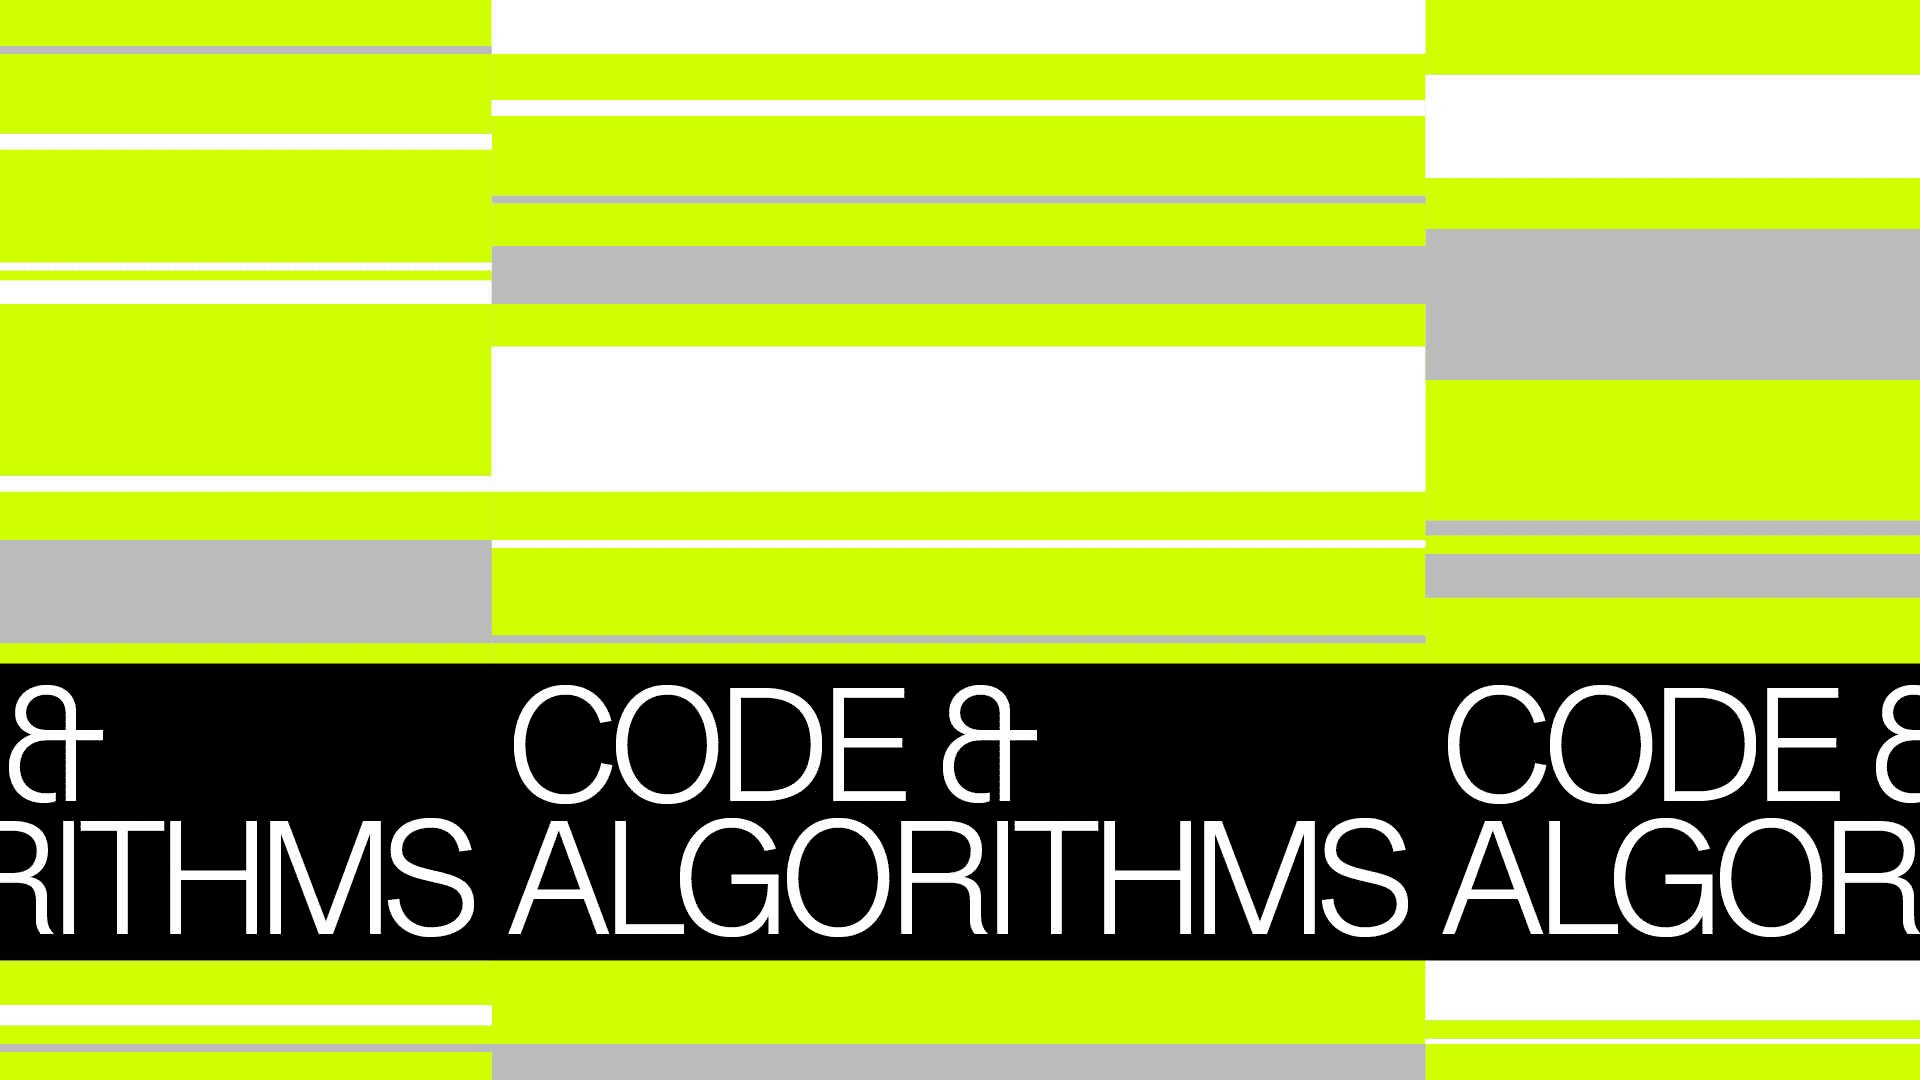 Code & algorithms. Wisdom in a Calculated World